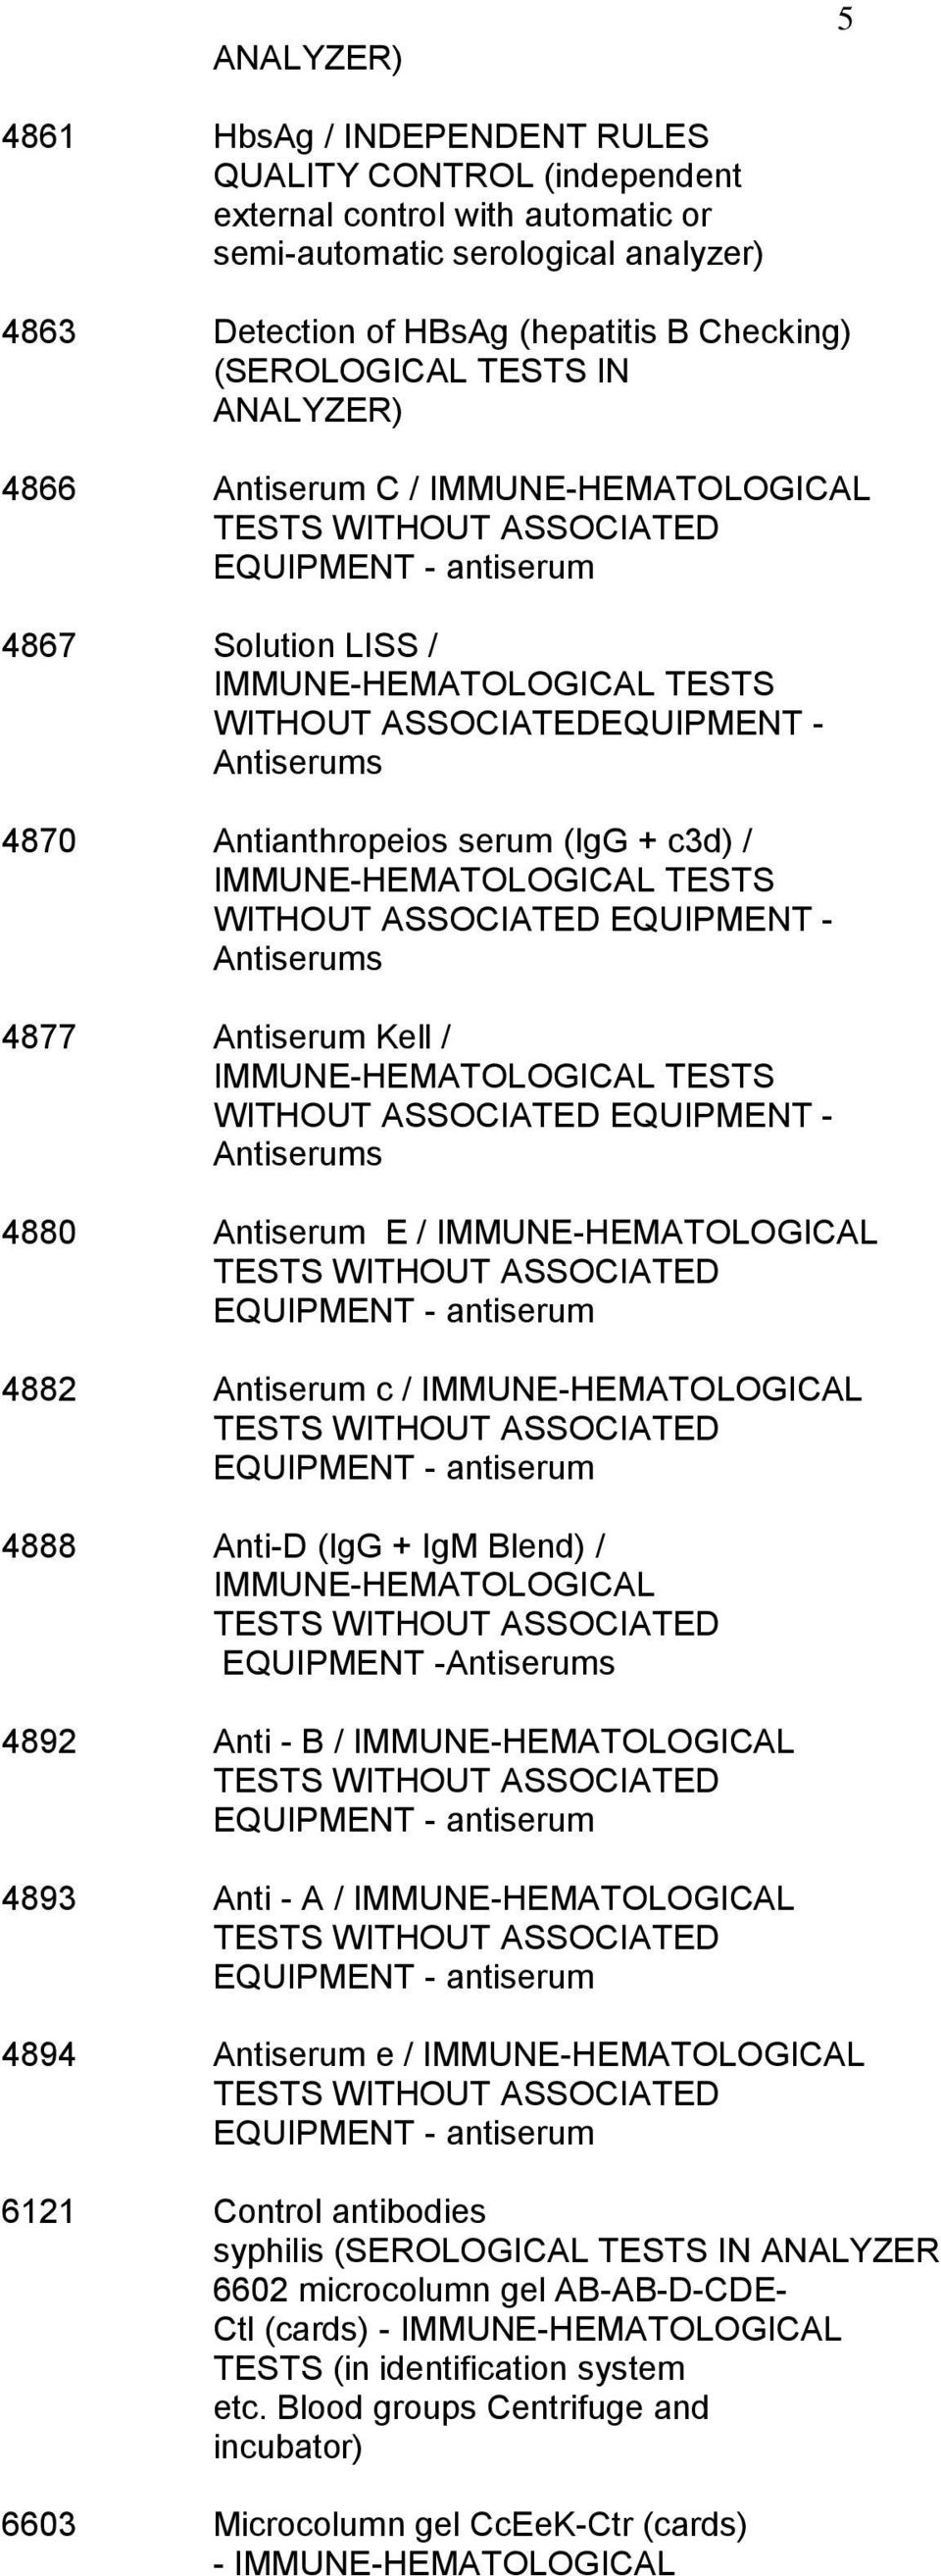 ASSOCIATED EQUIPMENT - Antiserums 4880 Antiserum E / IMMUNE-HEMATOLOGICAL 4882 Antiserum c / IMMUNE-HEMATOLOGICAL 4888 Anti-D (IgG + IgM Blend) / IMMUNE-HEMATOLOGICAL EQUIPMENT -Antiserums 4892 Anti